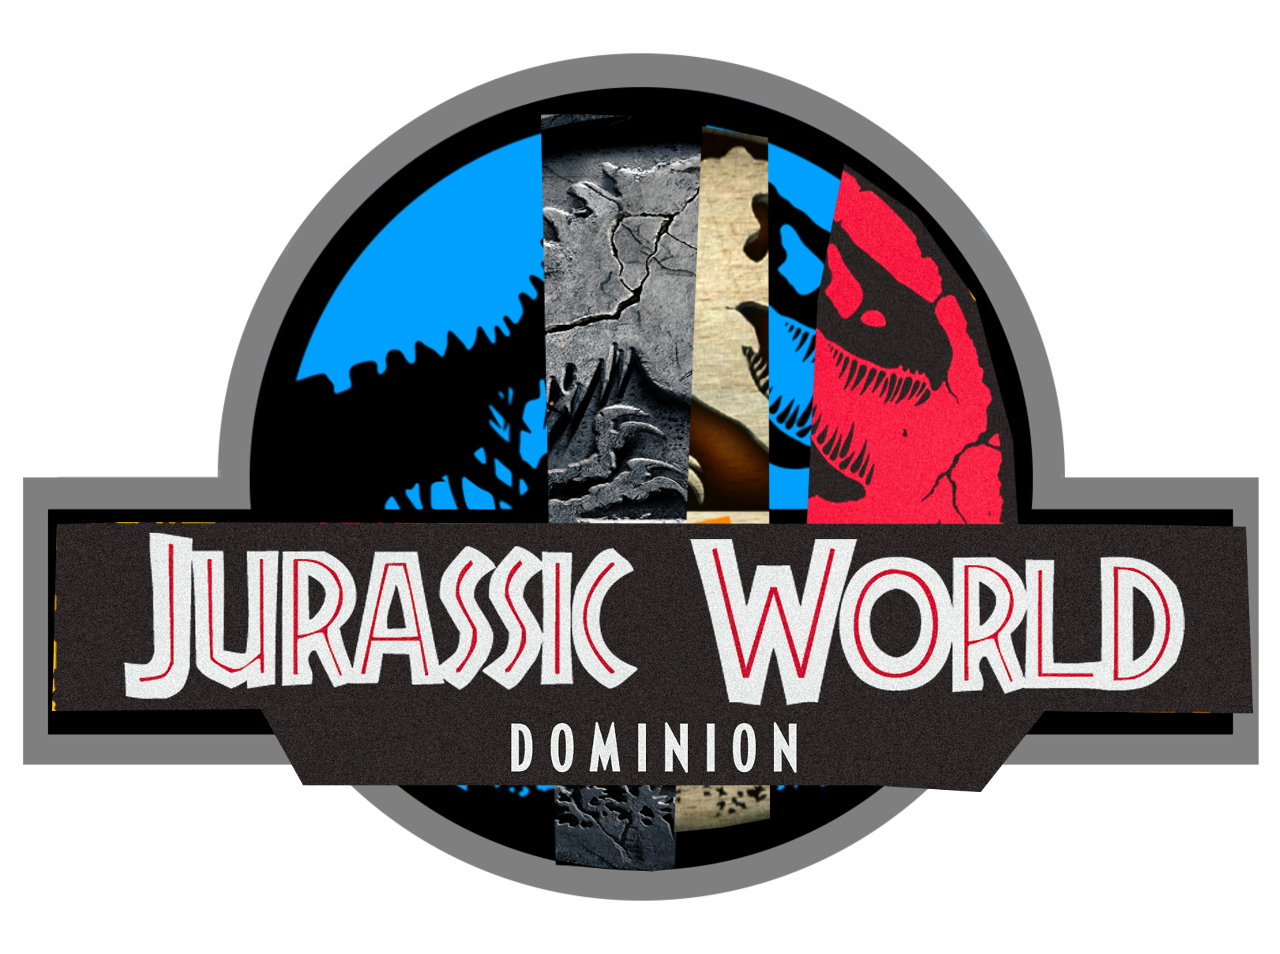 Jurassic World: Dominion download the last version for apple